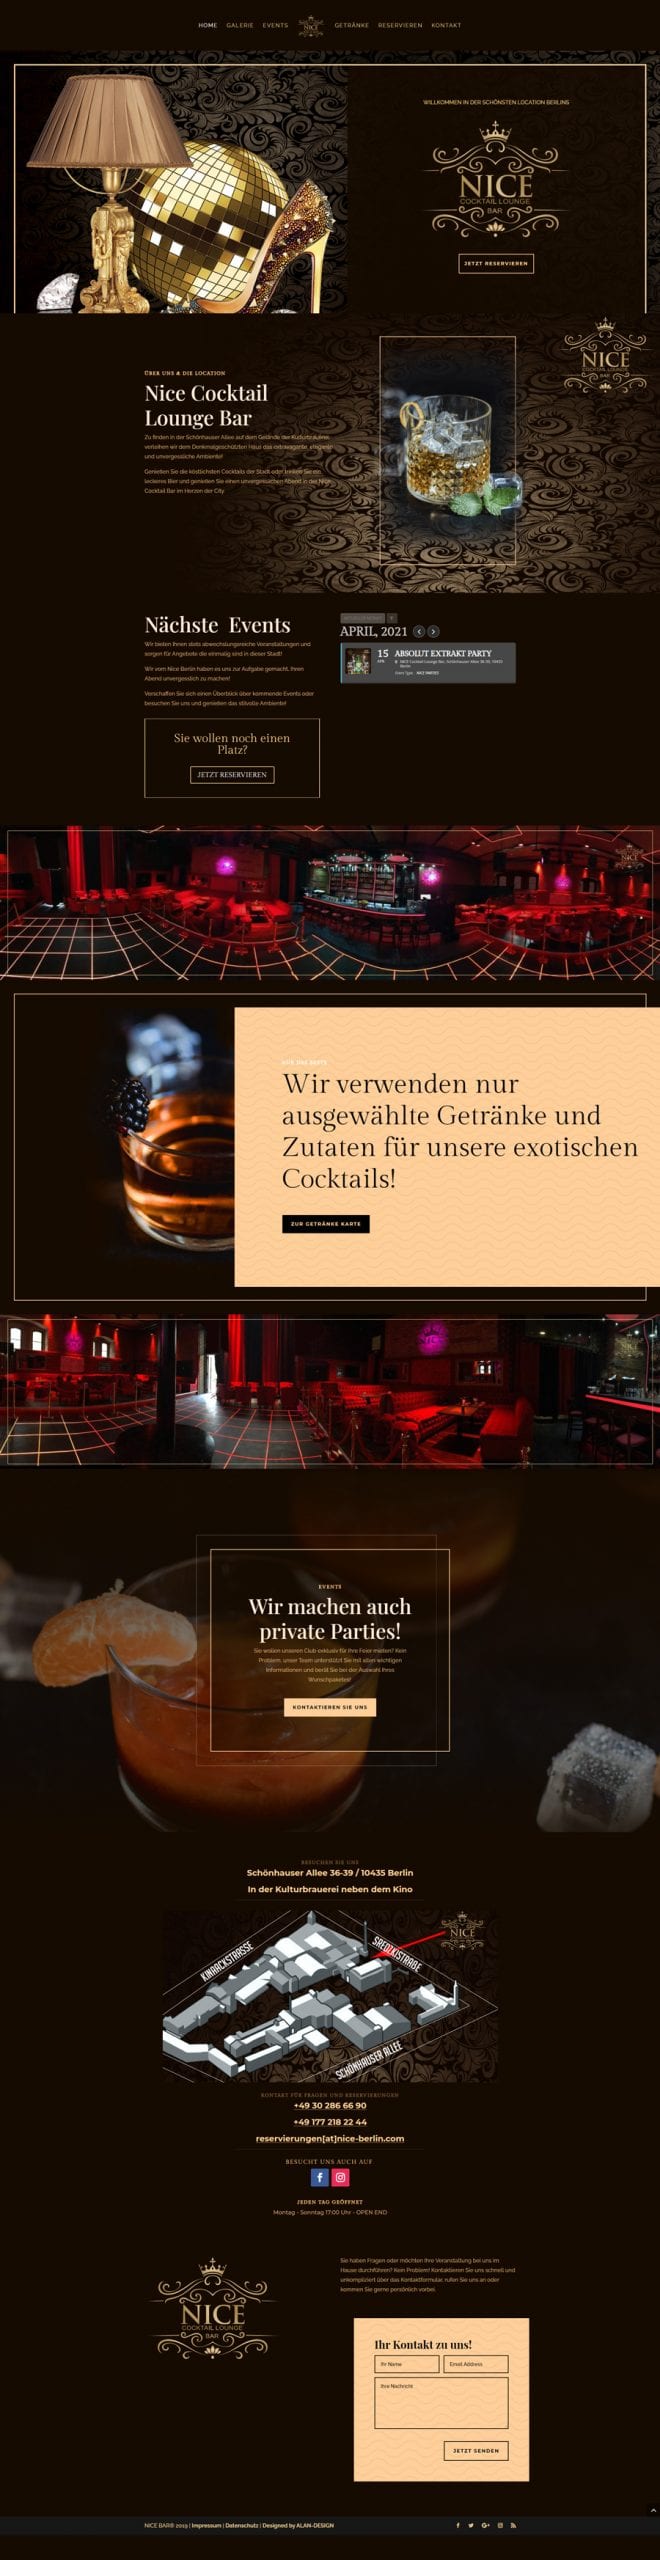 Nice Cocktail Lounge Berlin